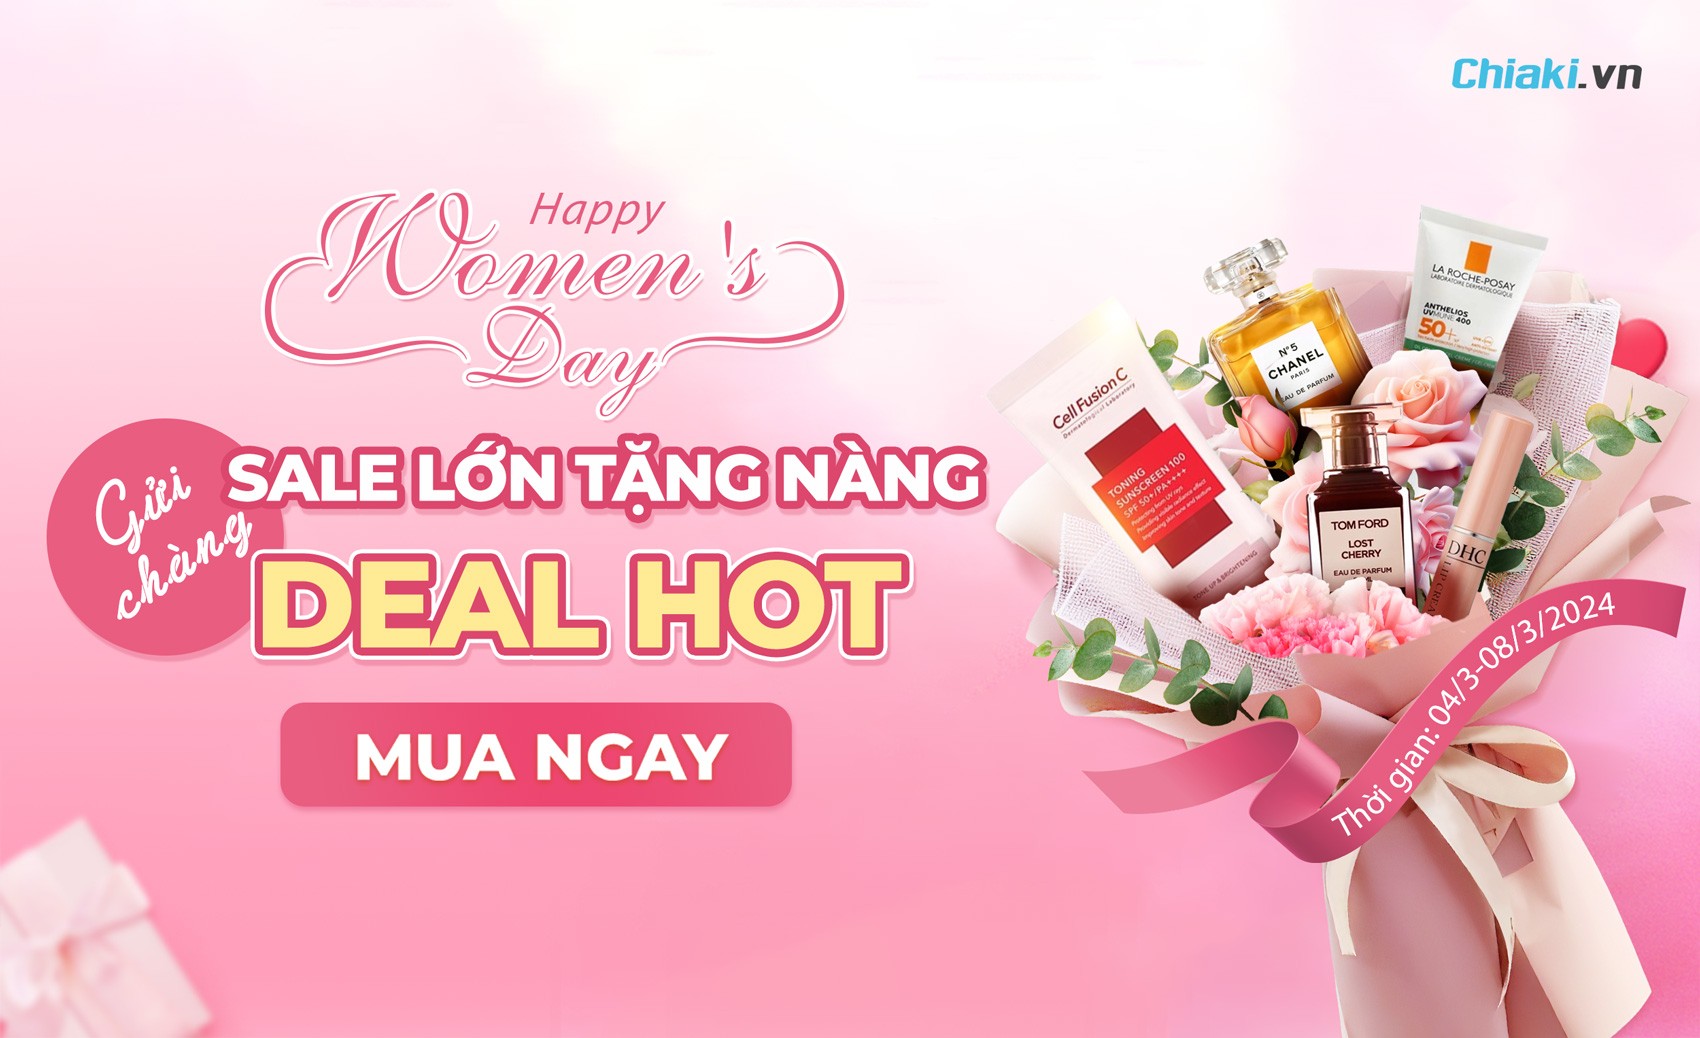 Happy Women's Day 8/3 - Sale Lớn Chiaki Tặng Nàng Deal Hot